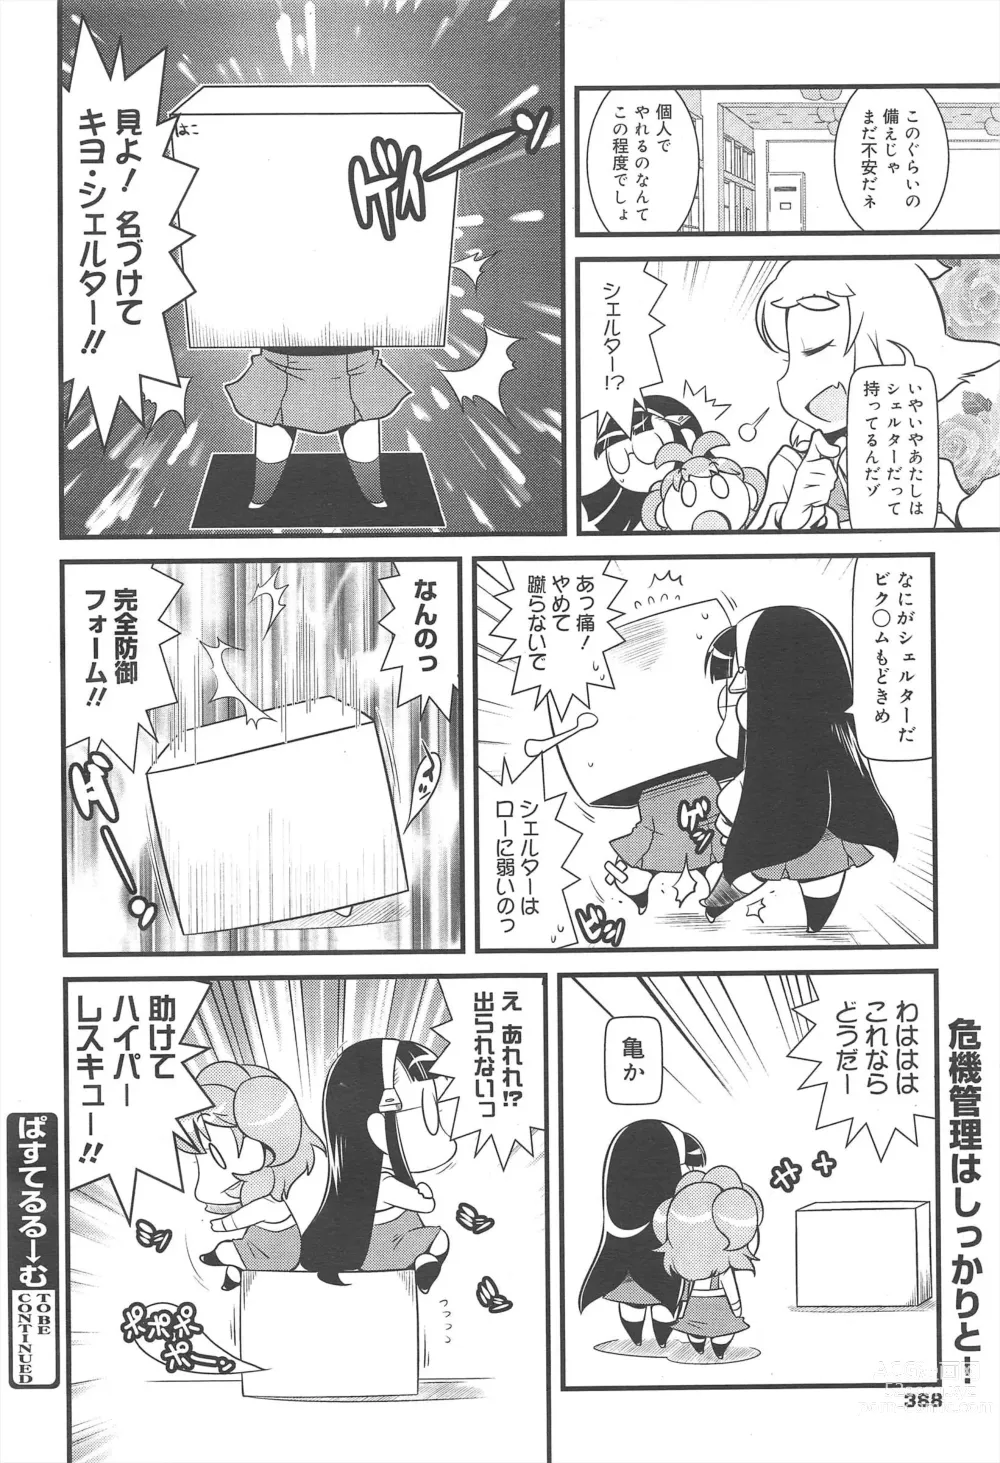 Page 388 of manga COMIC Megamilk 2011-06 Vol.12